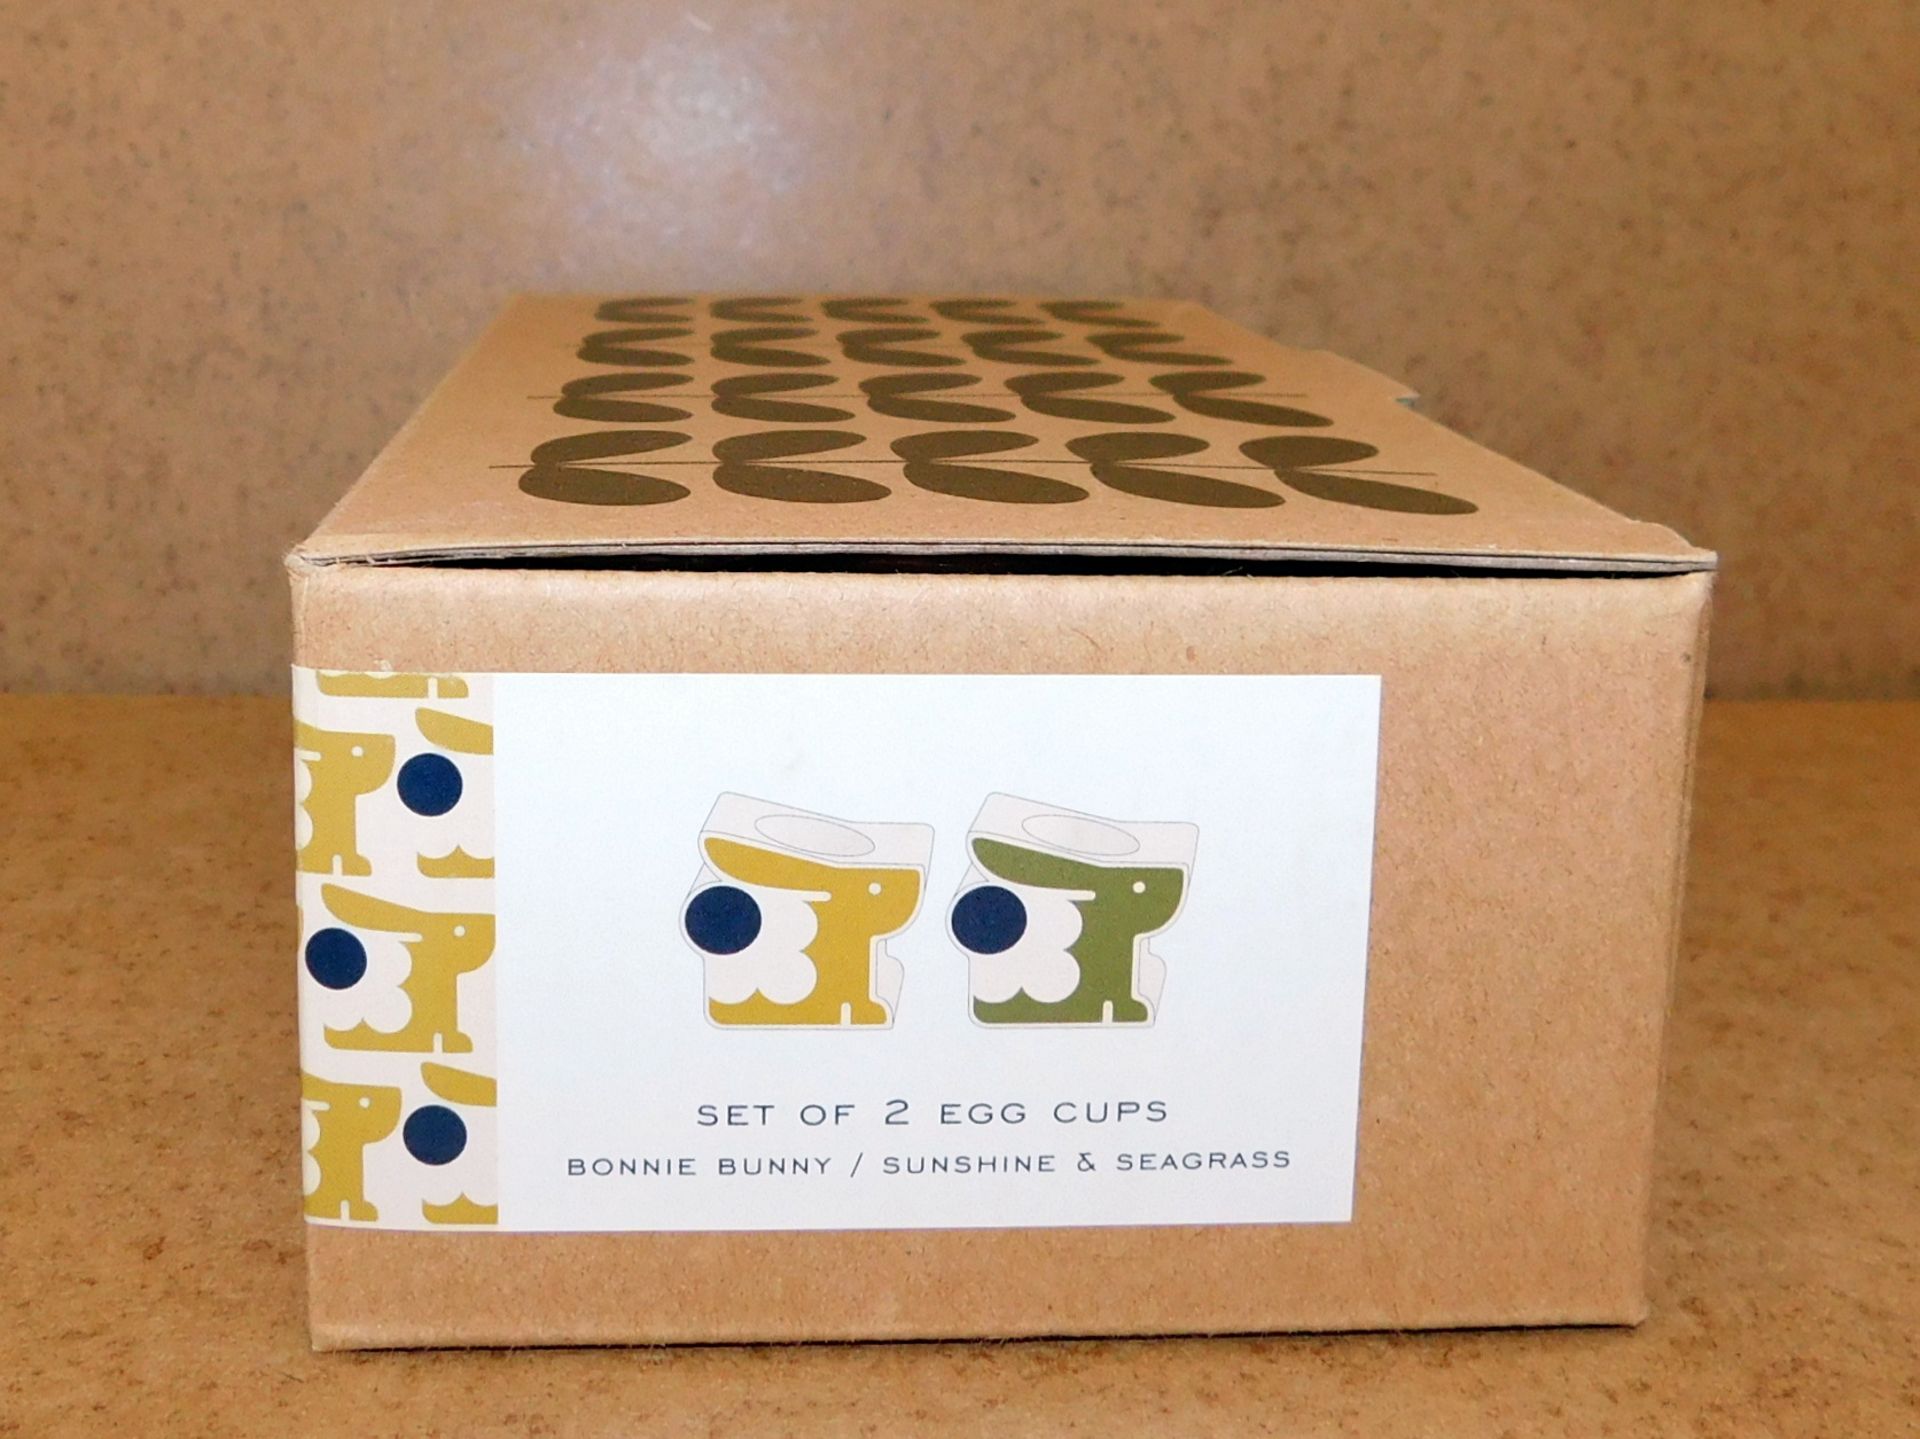 7 Orla Kiely Set of 2 Egg Cups, Bonnie Bunny/Sunshine & Seagrass (RRP £20 per set) - Image 2 of 2